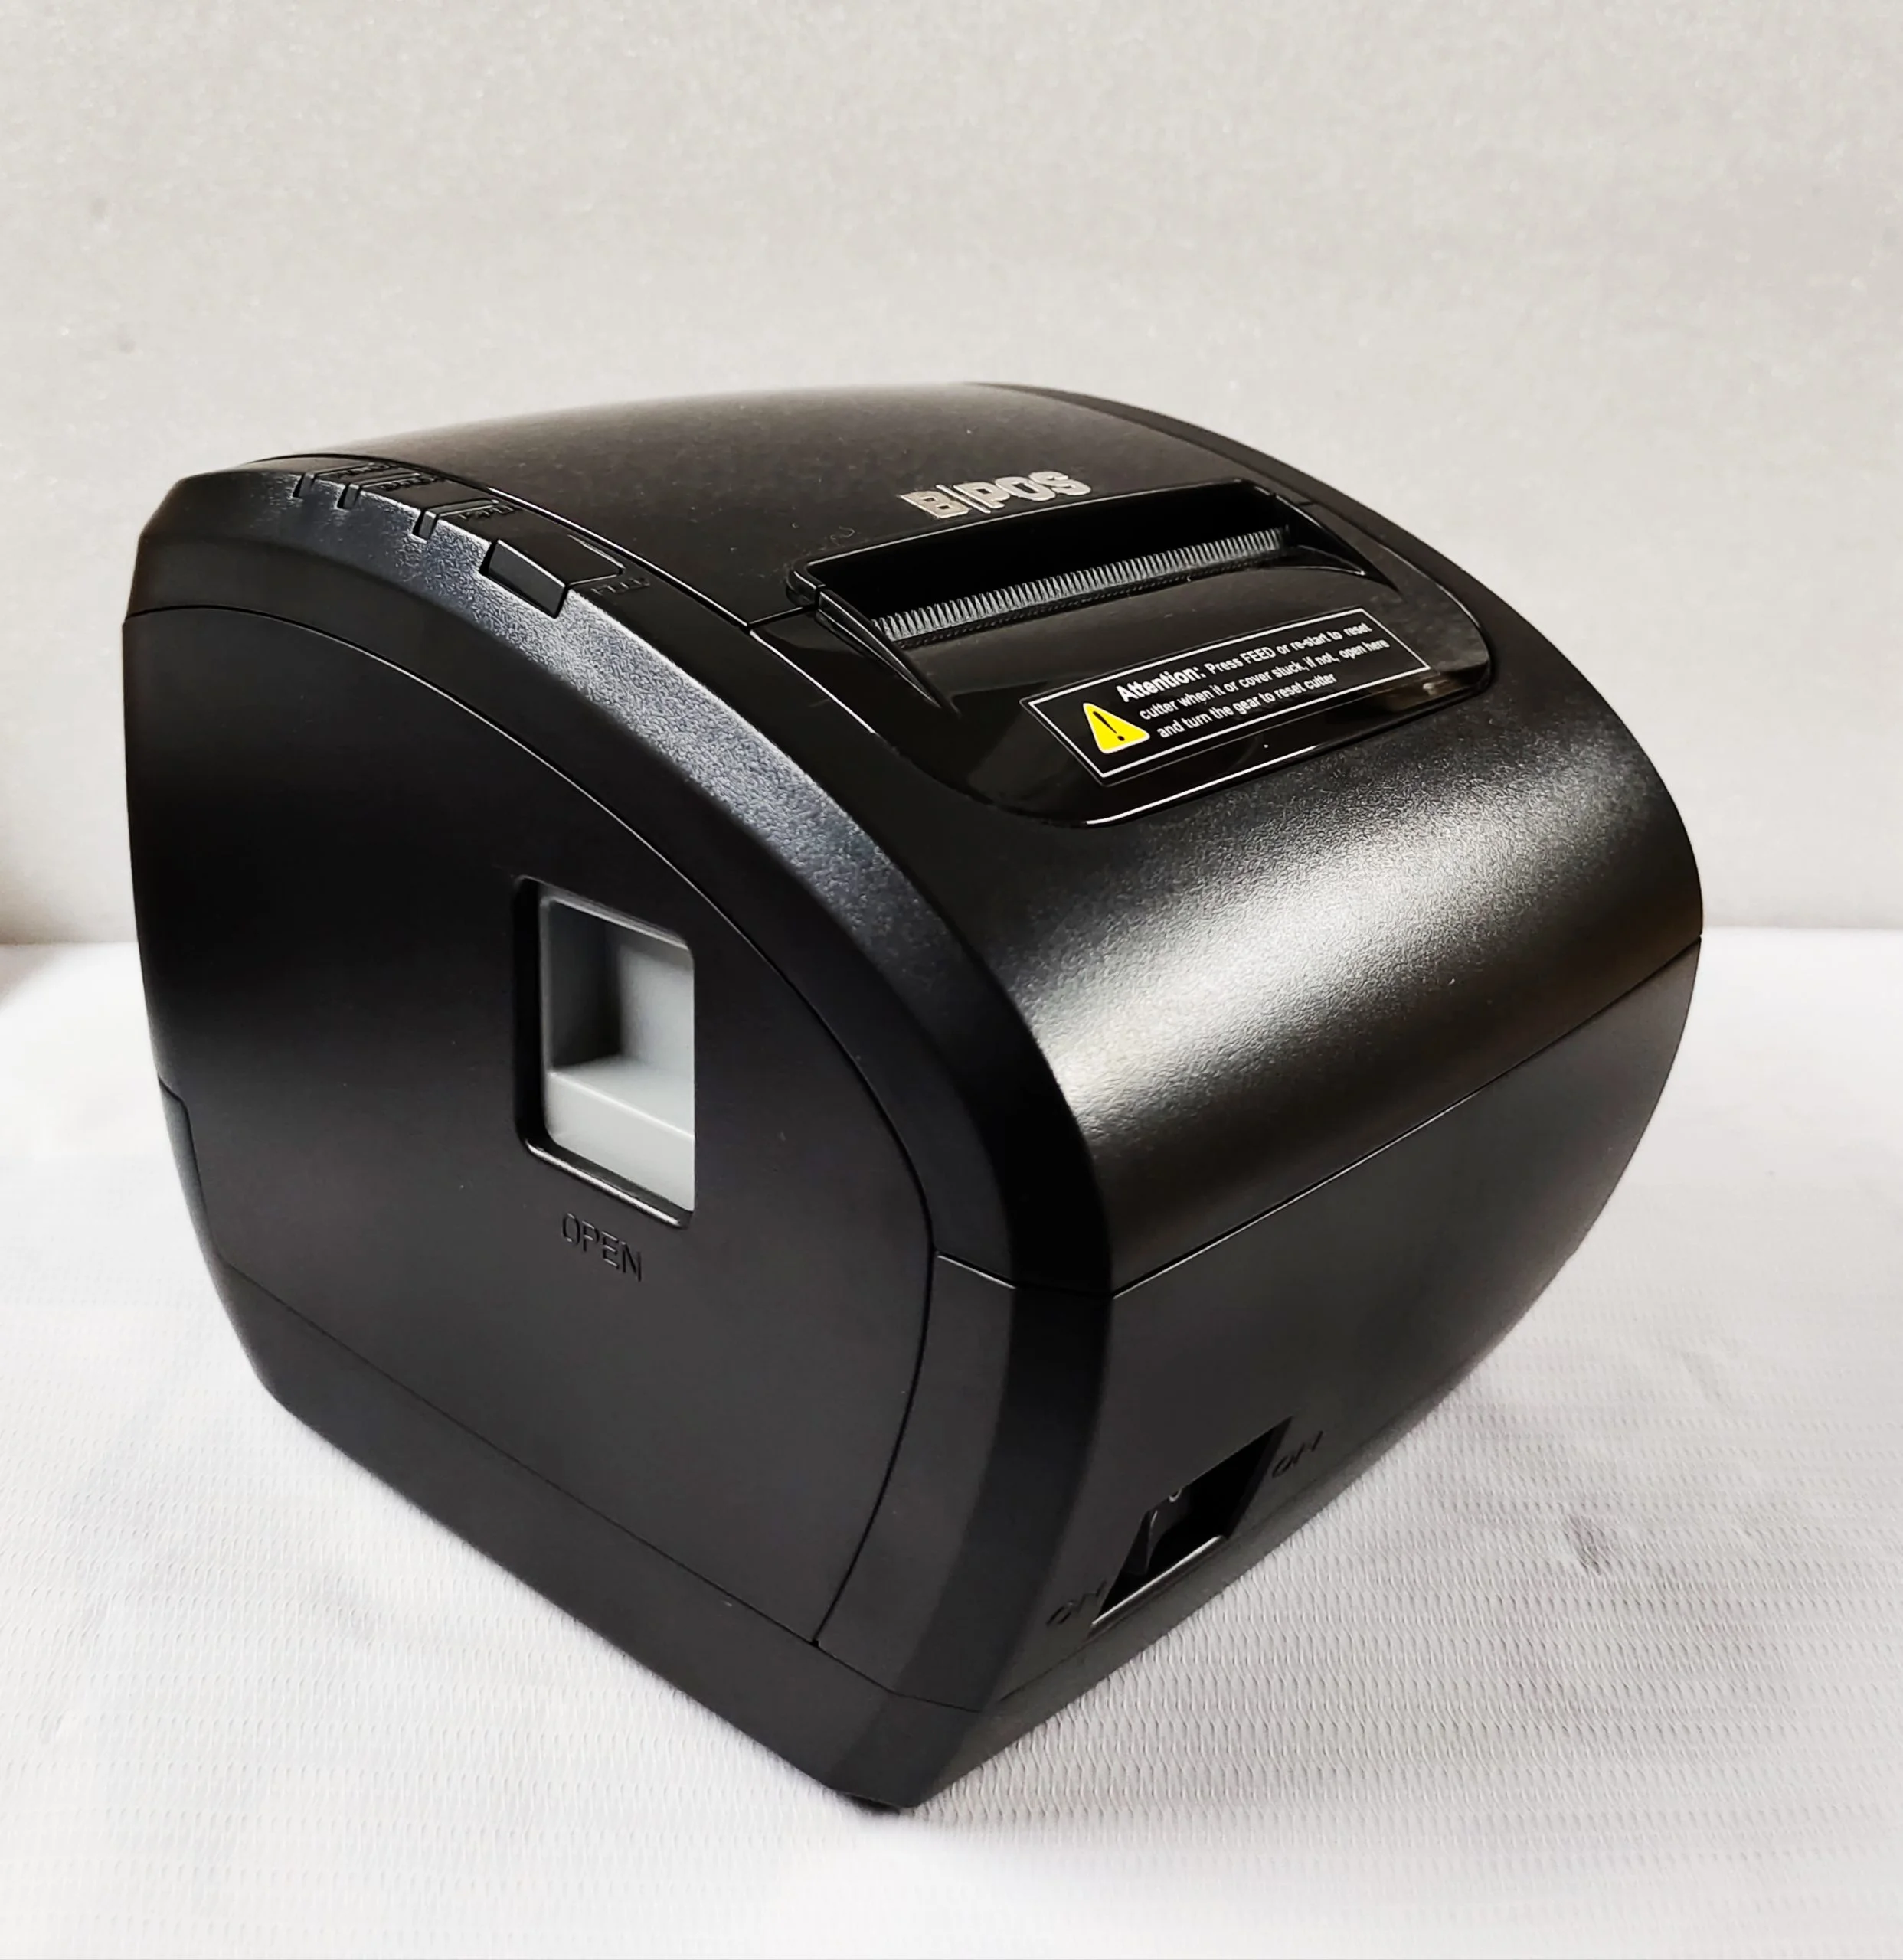 Thermal Printer BPOS RP 260IV USB - POS Market Online